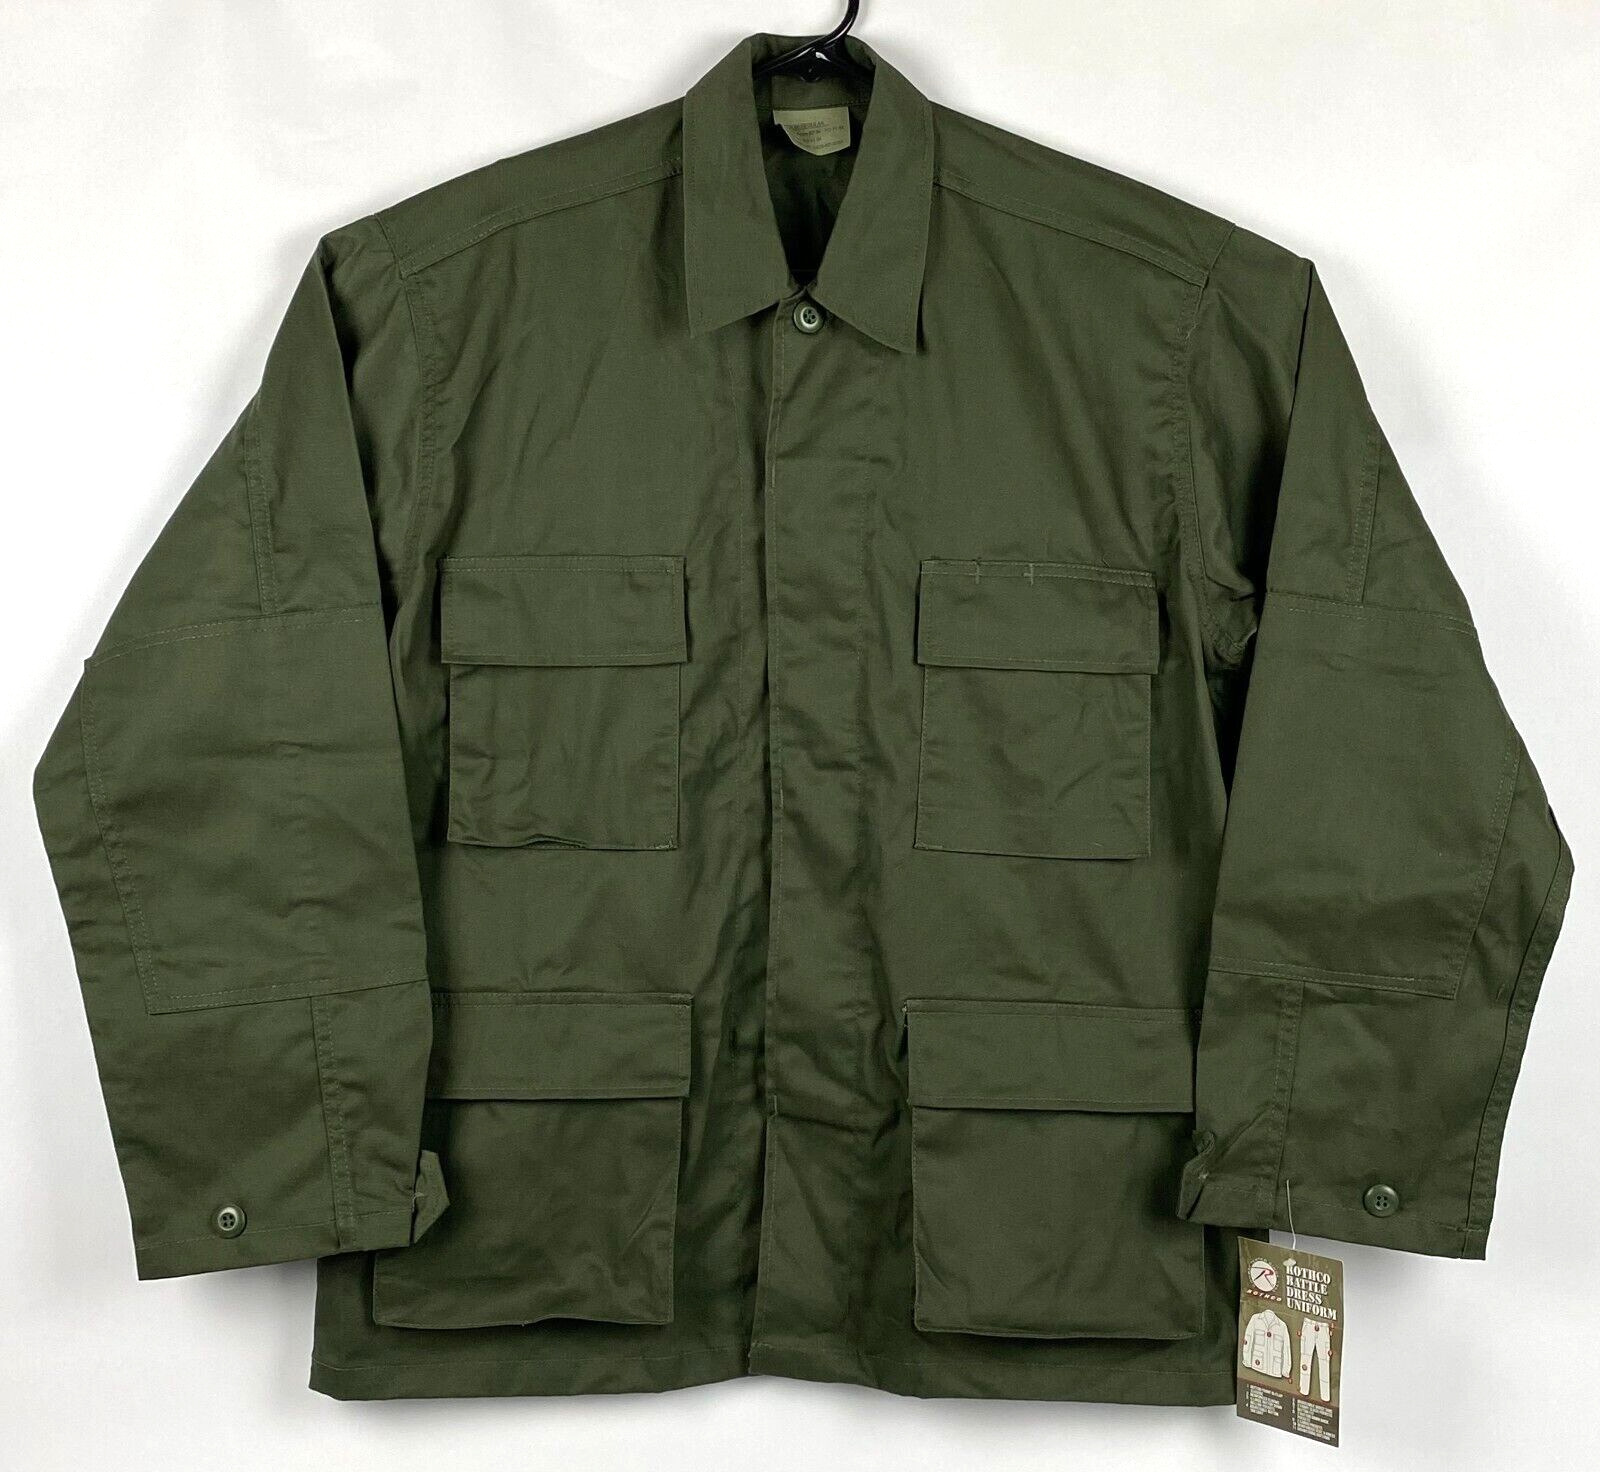 Rothco Military BDU Shirt Tactical Uniform Army Coat Fatigue Jacket Size Med NWT